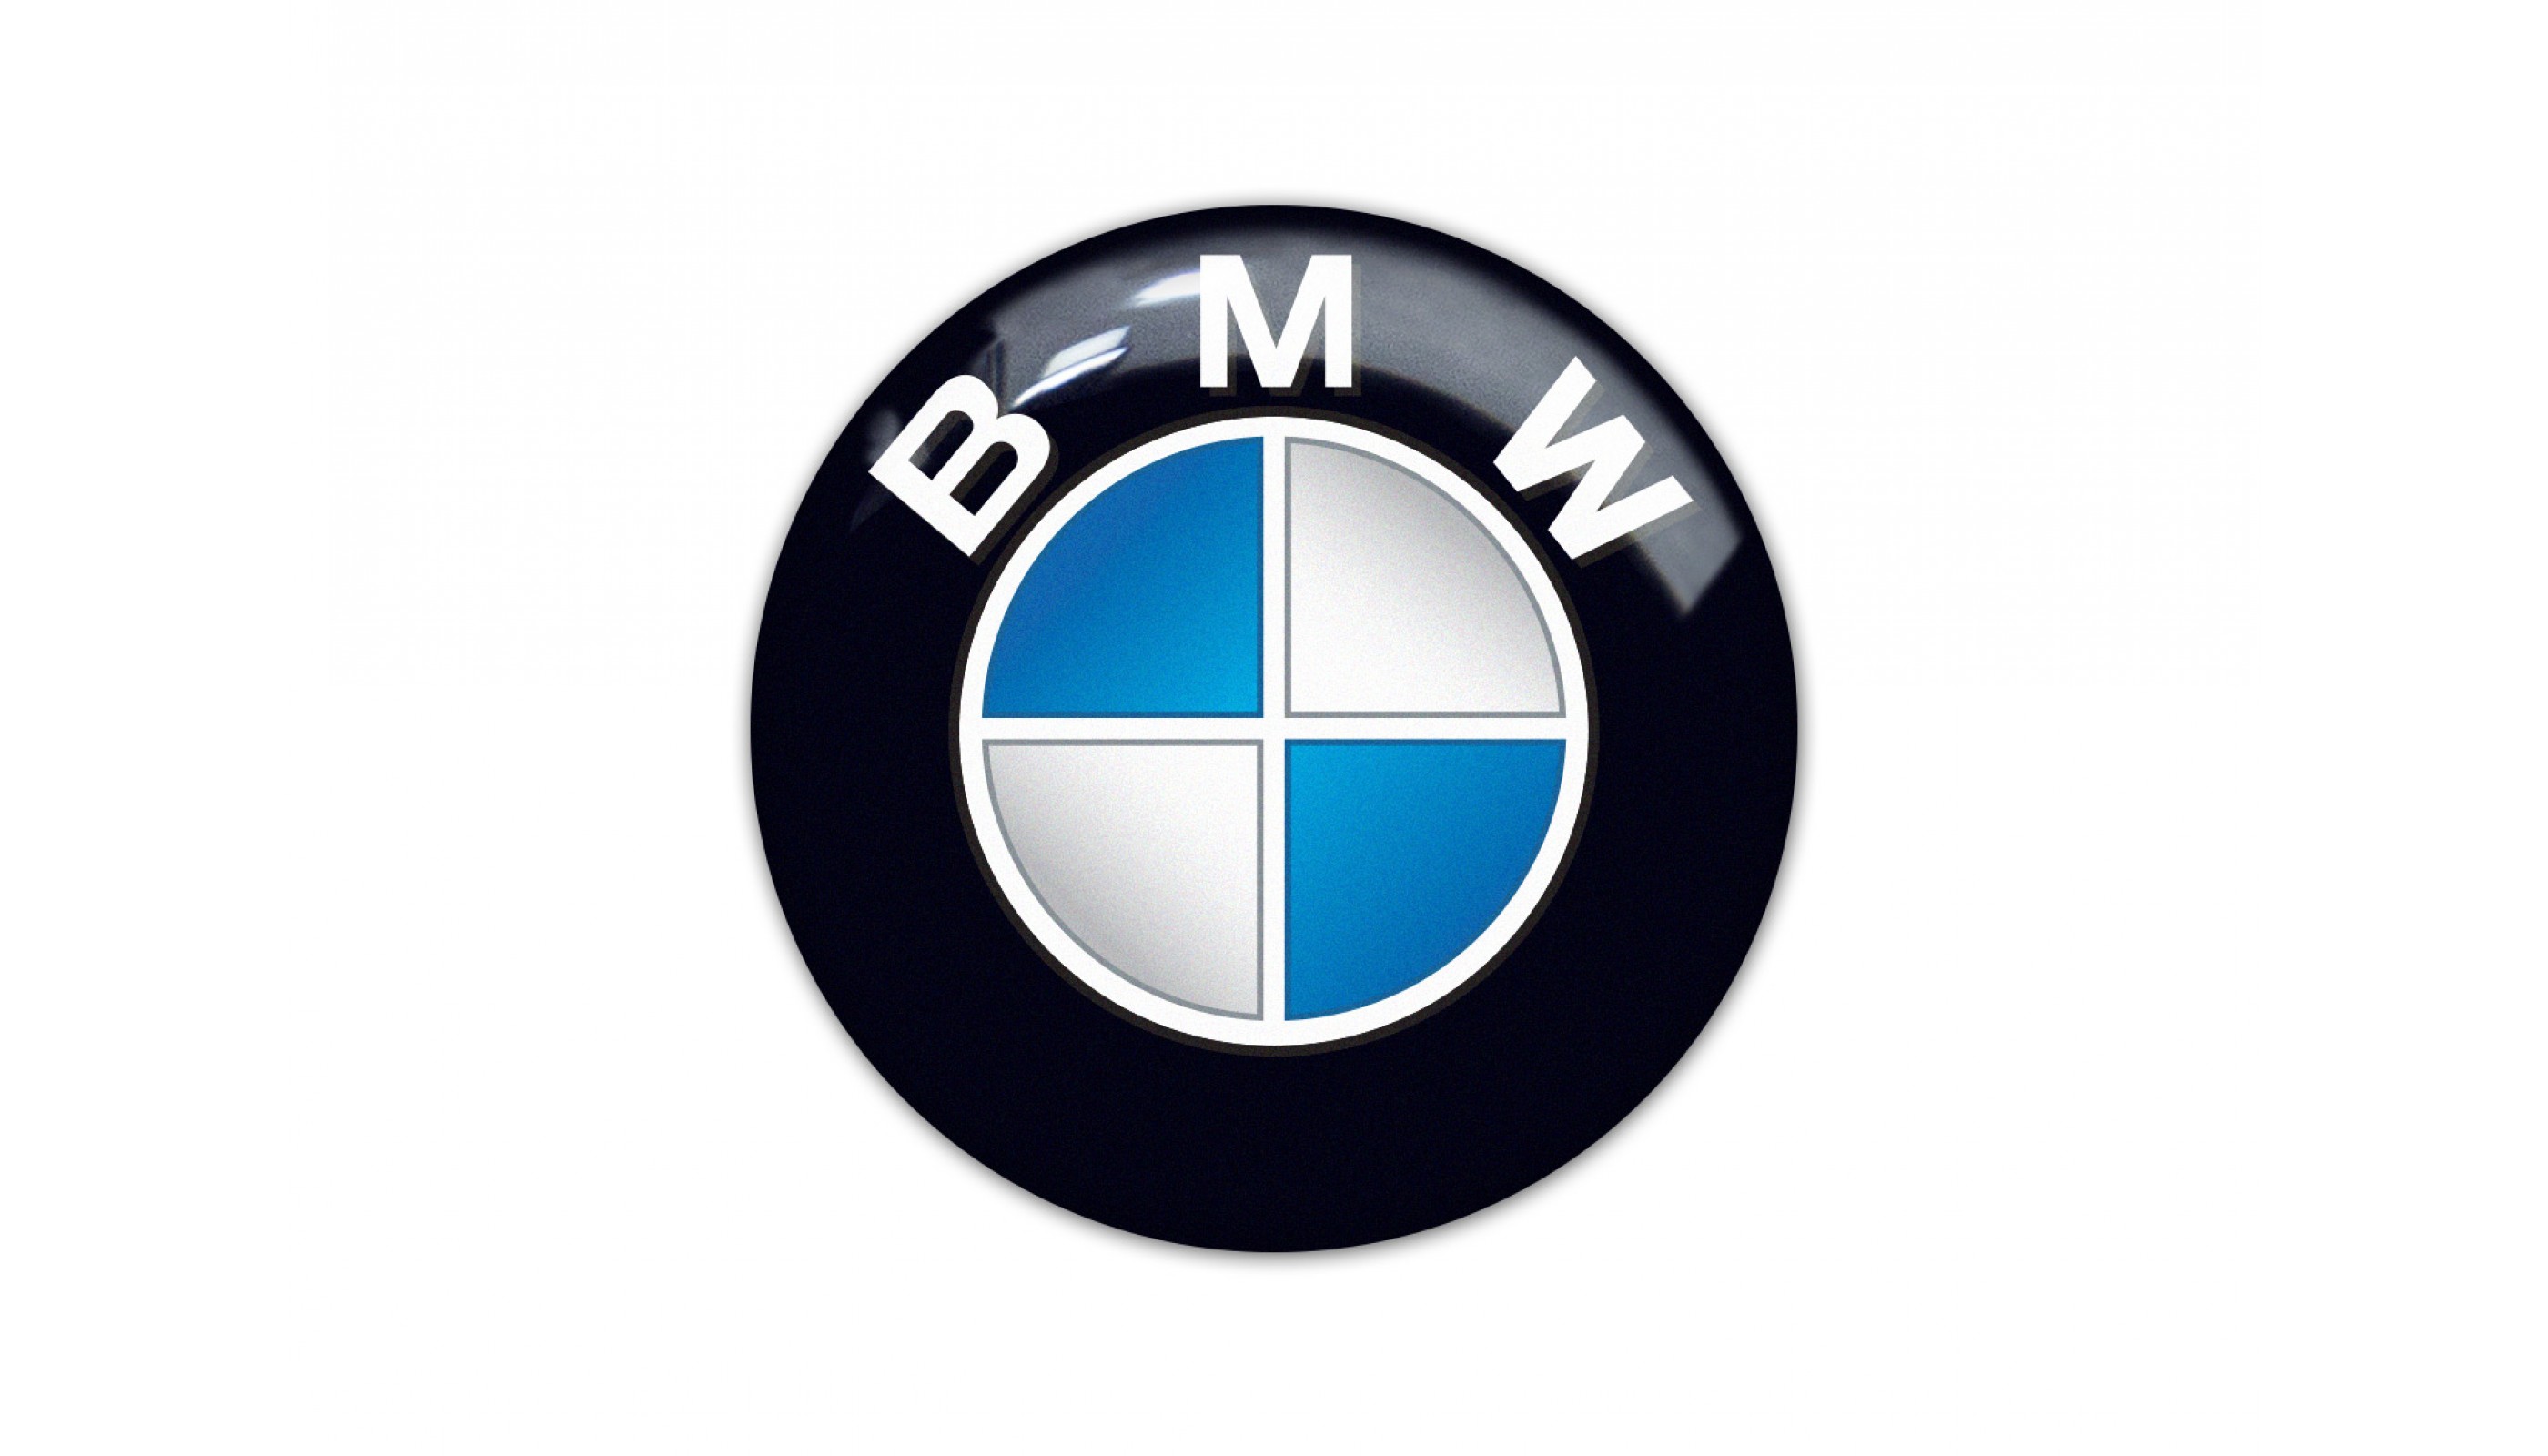 BMW Classic emblem